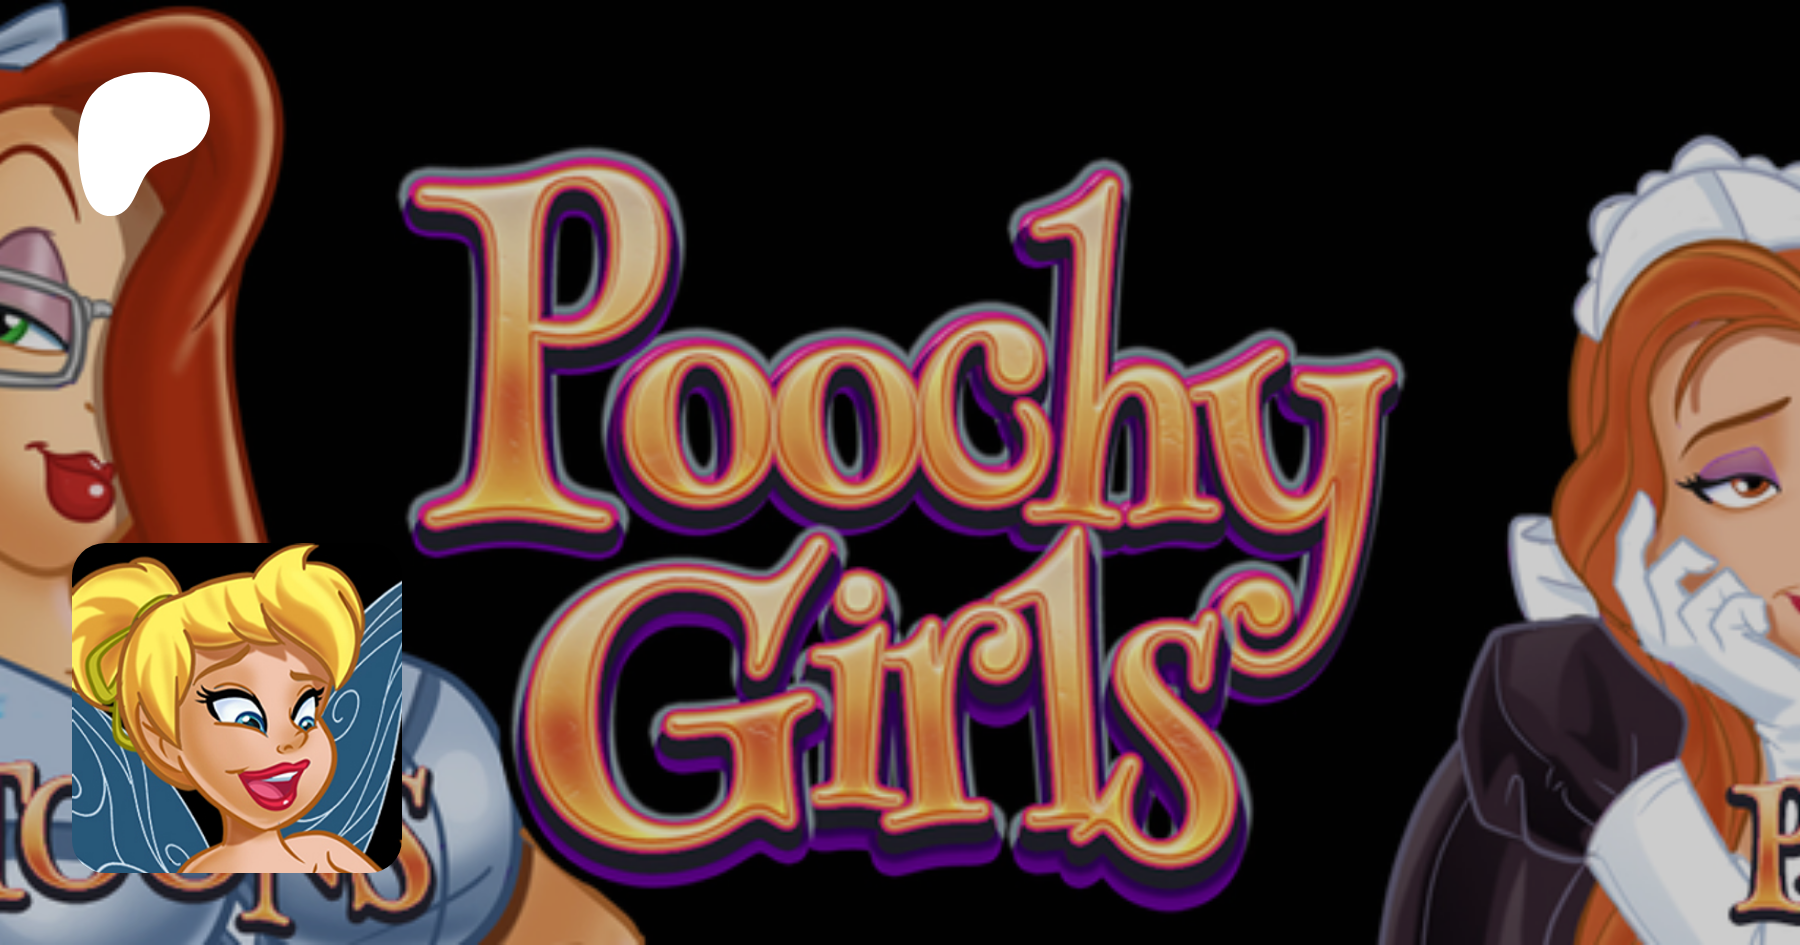 Poochygirls | creating NSFW parody art of Cartoon Girls! | Patreon